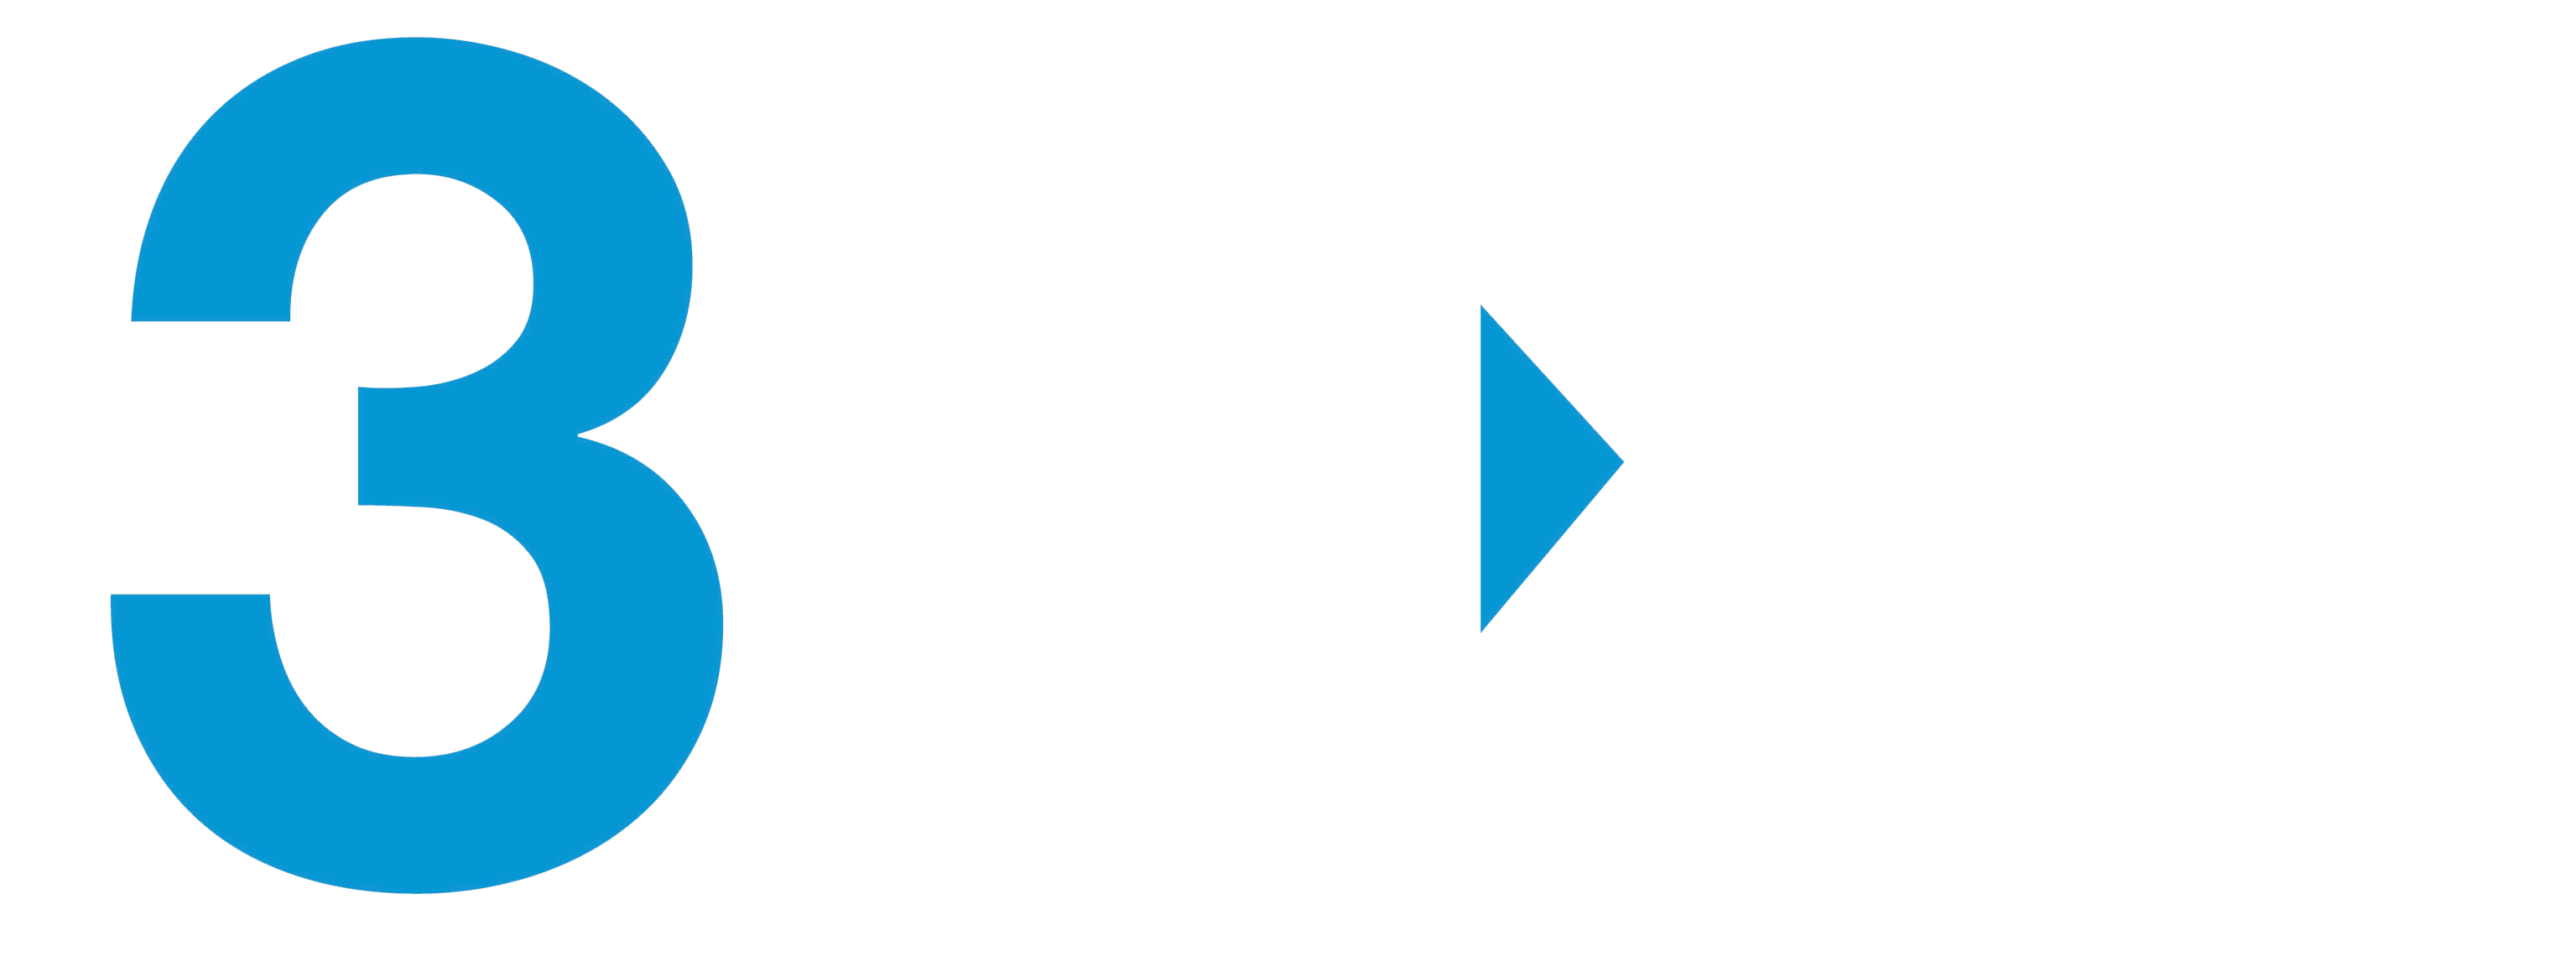 3CX Logo white